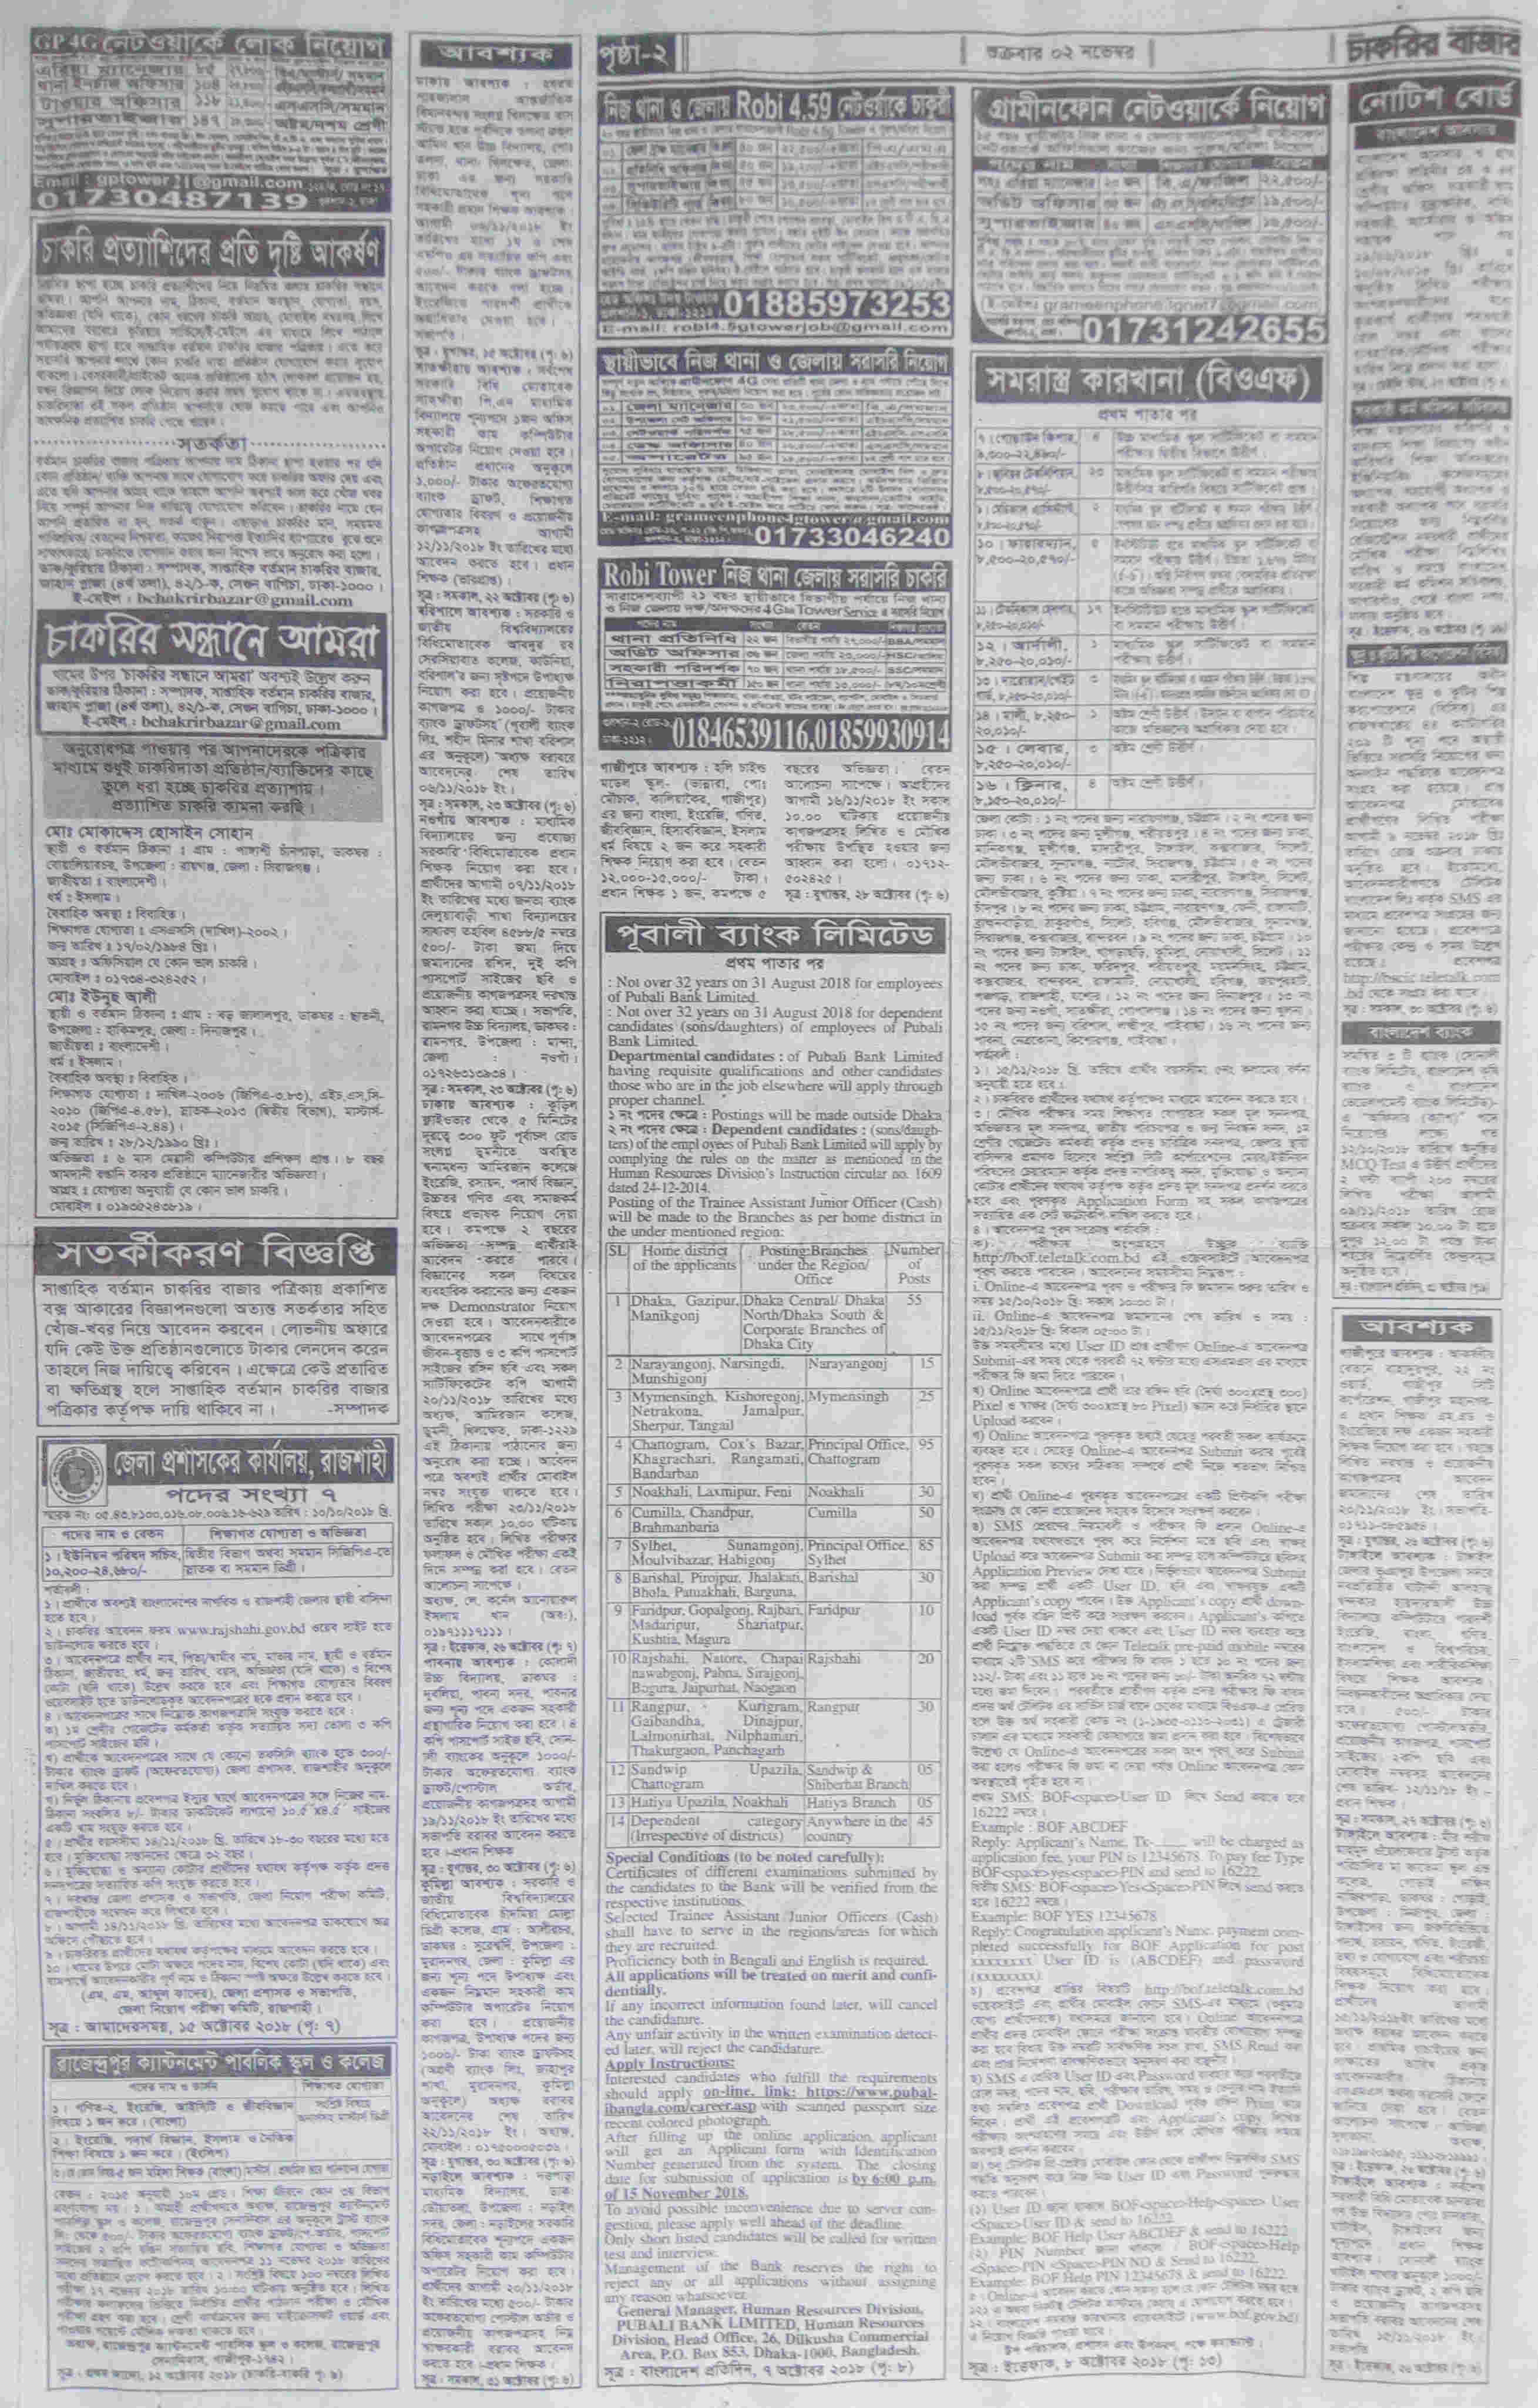 Chakrir Bazar Weekly Jobs Newspaper